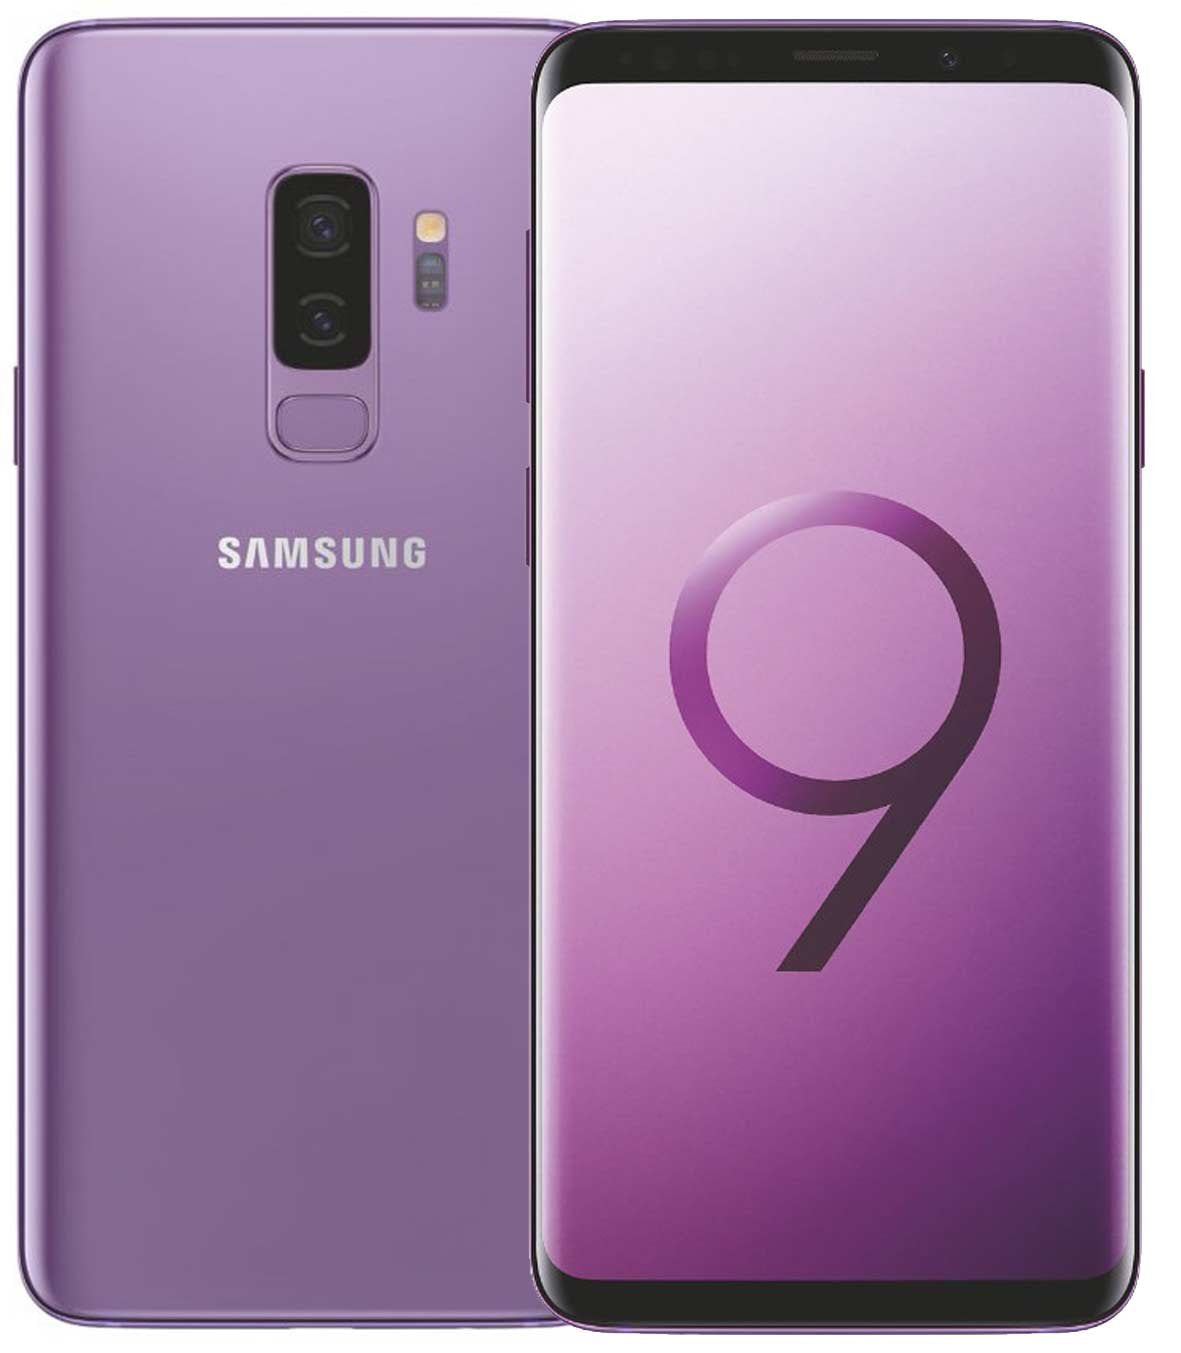 SAMSUNG G965F 64Gb 4G International Version Galaxy S9 Plus - Lilac Purple